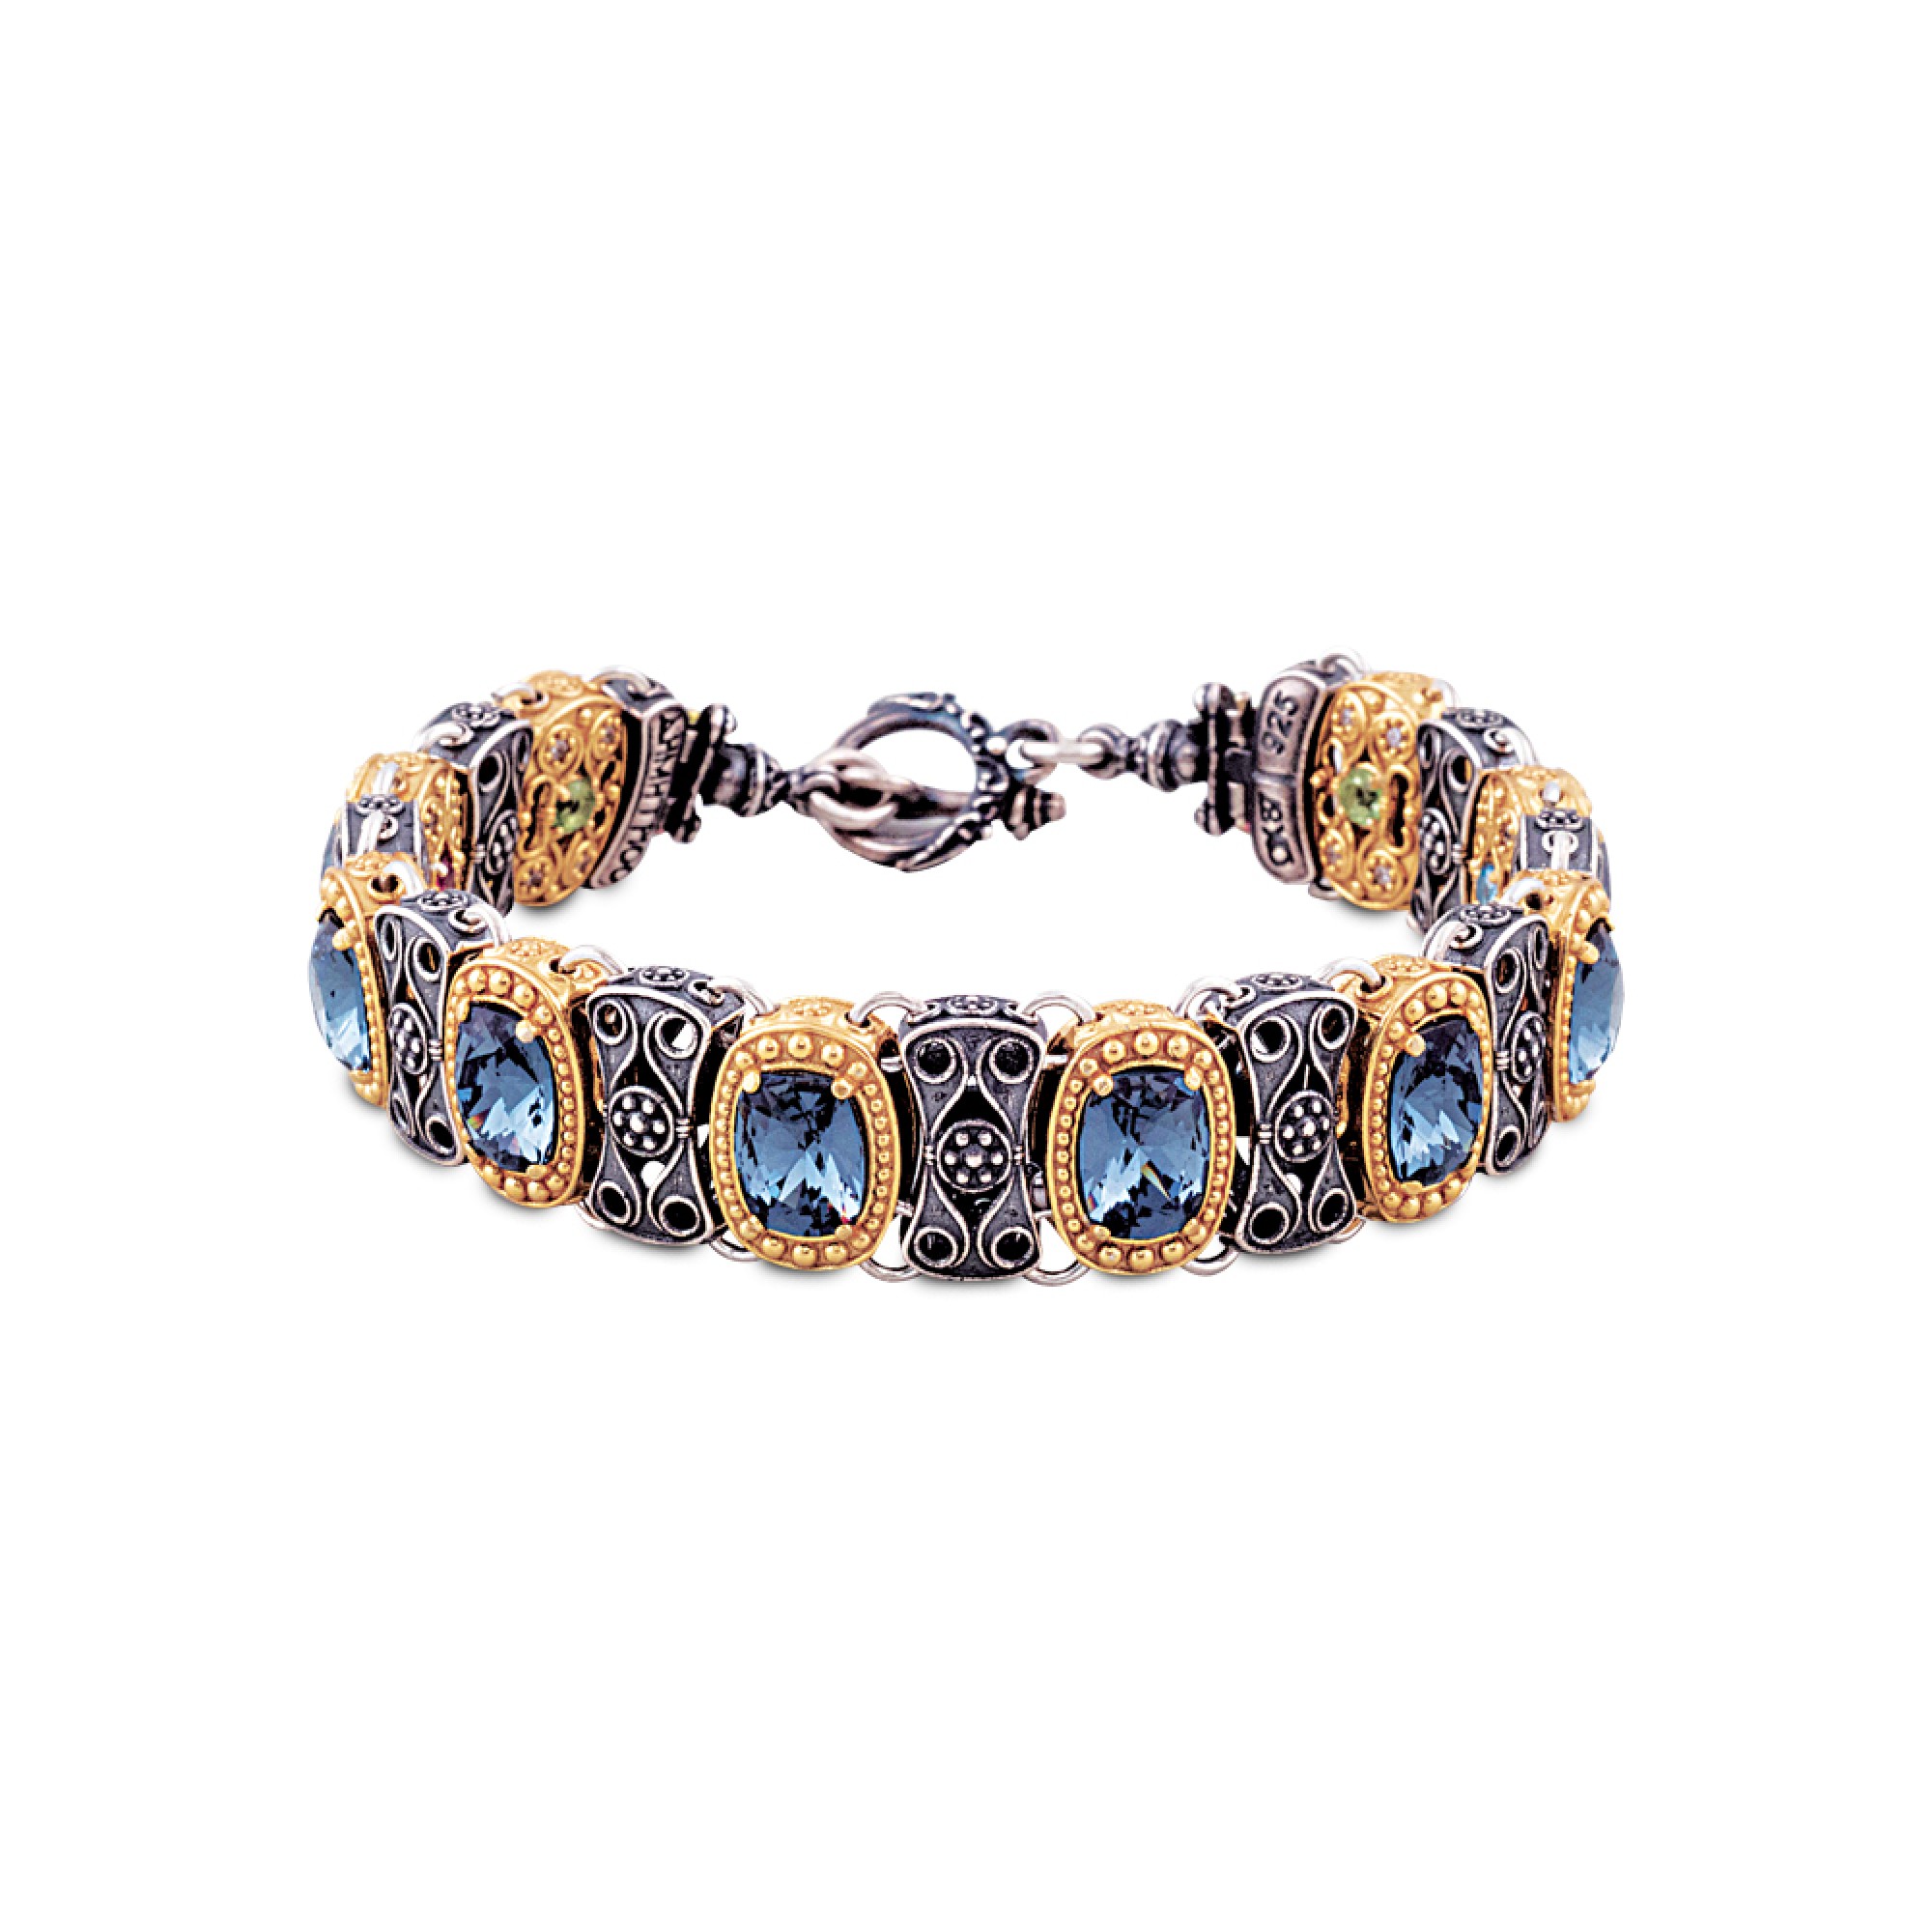 Reversible Bracelet With Swarovski Crystals And Semi Precious Stones